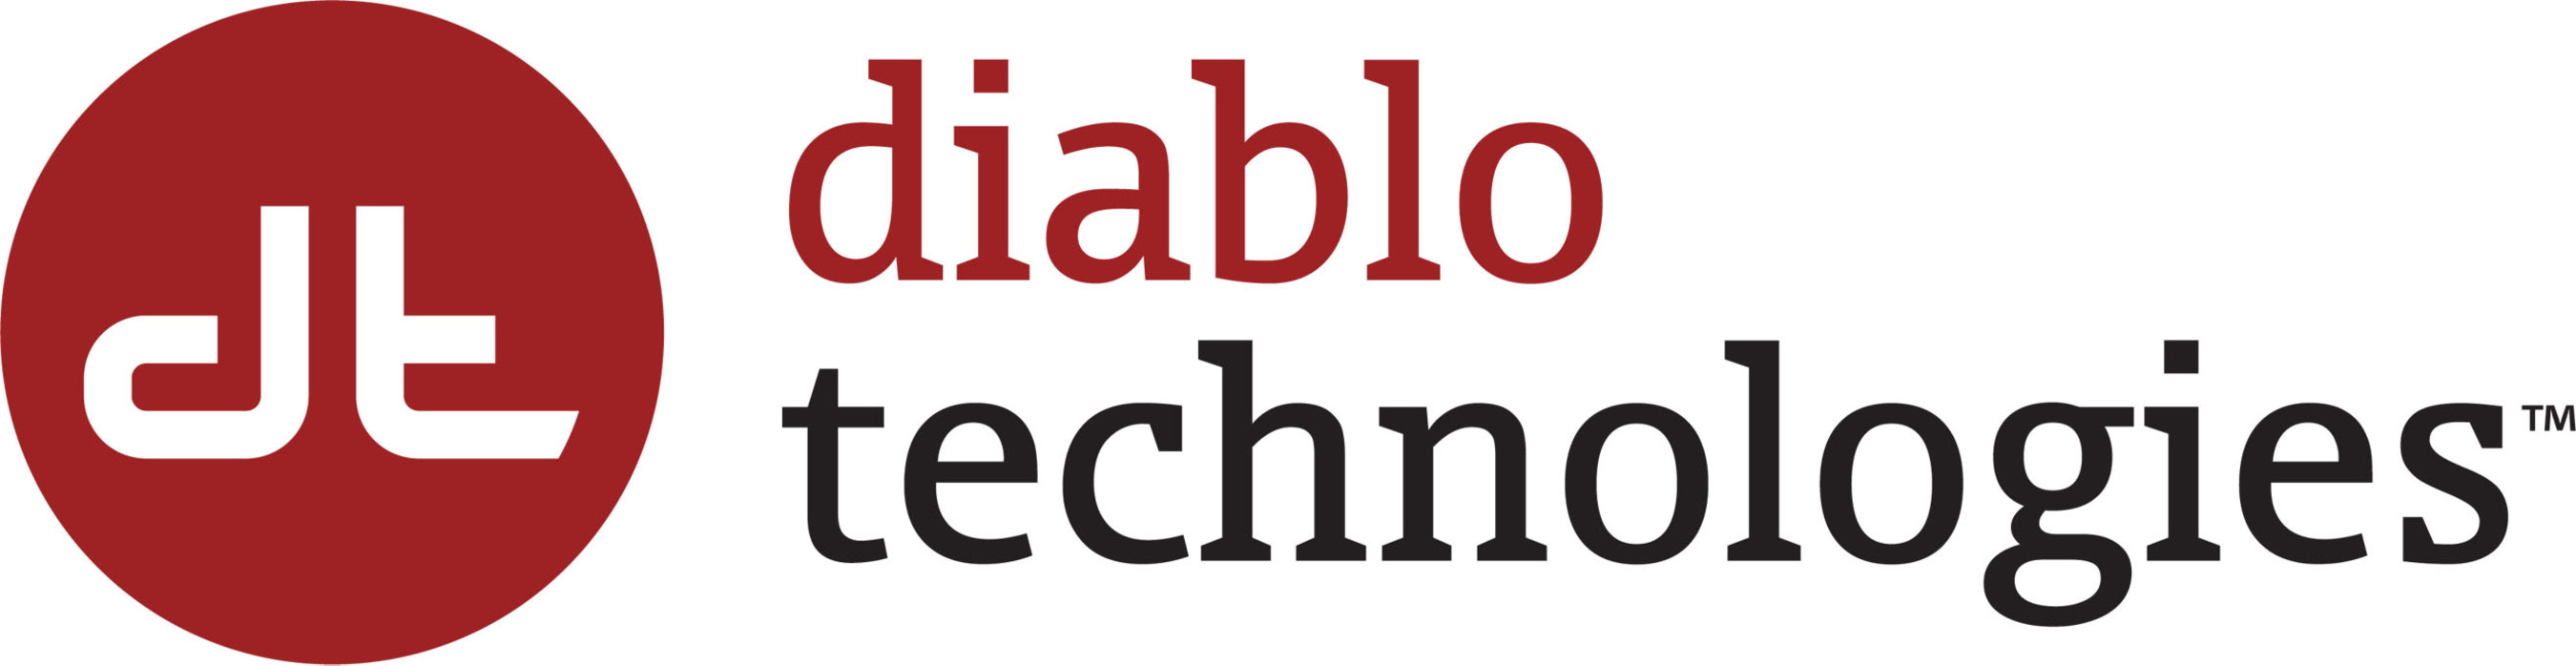 Diablo Technologies logo. (PRNewsFoto/Diablo Technologies) (PRNewsFoto/)